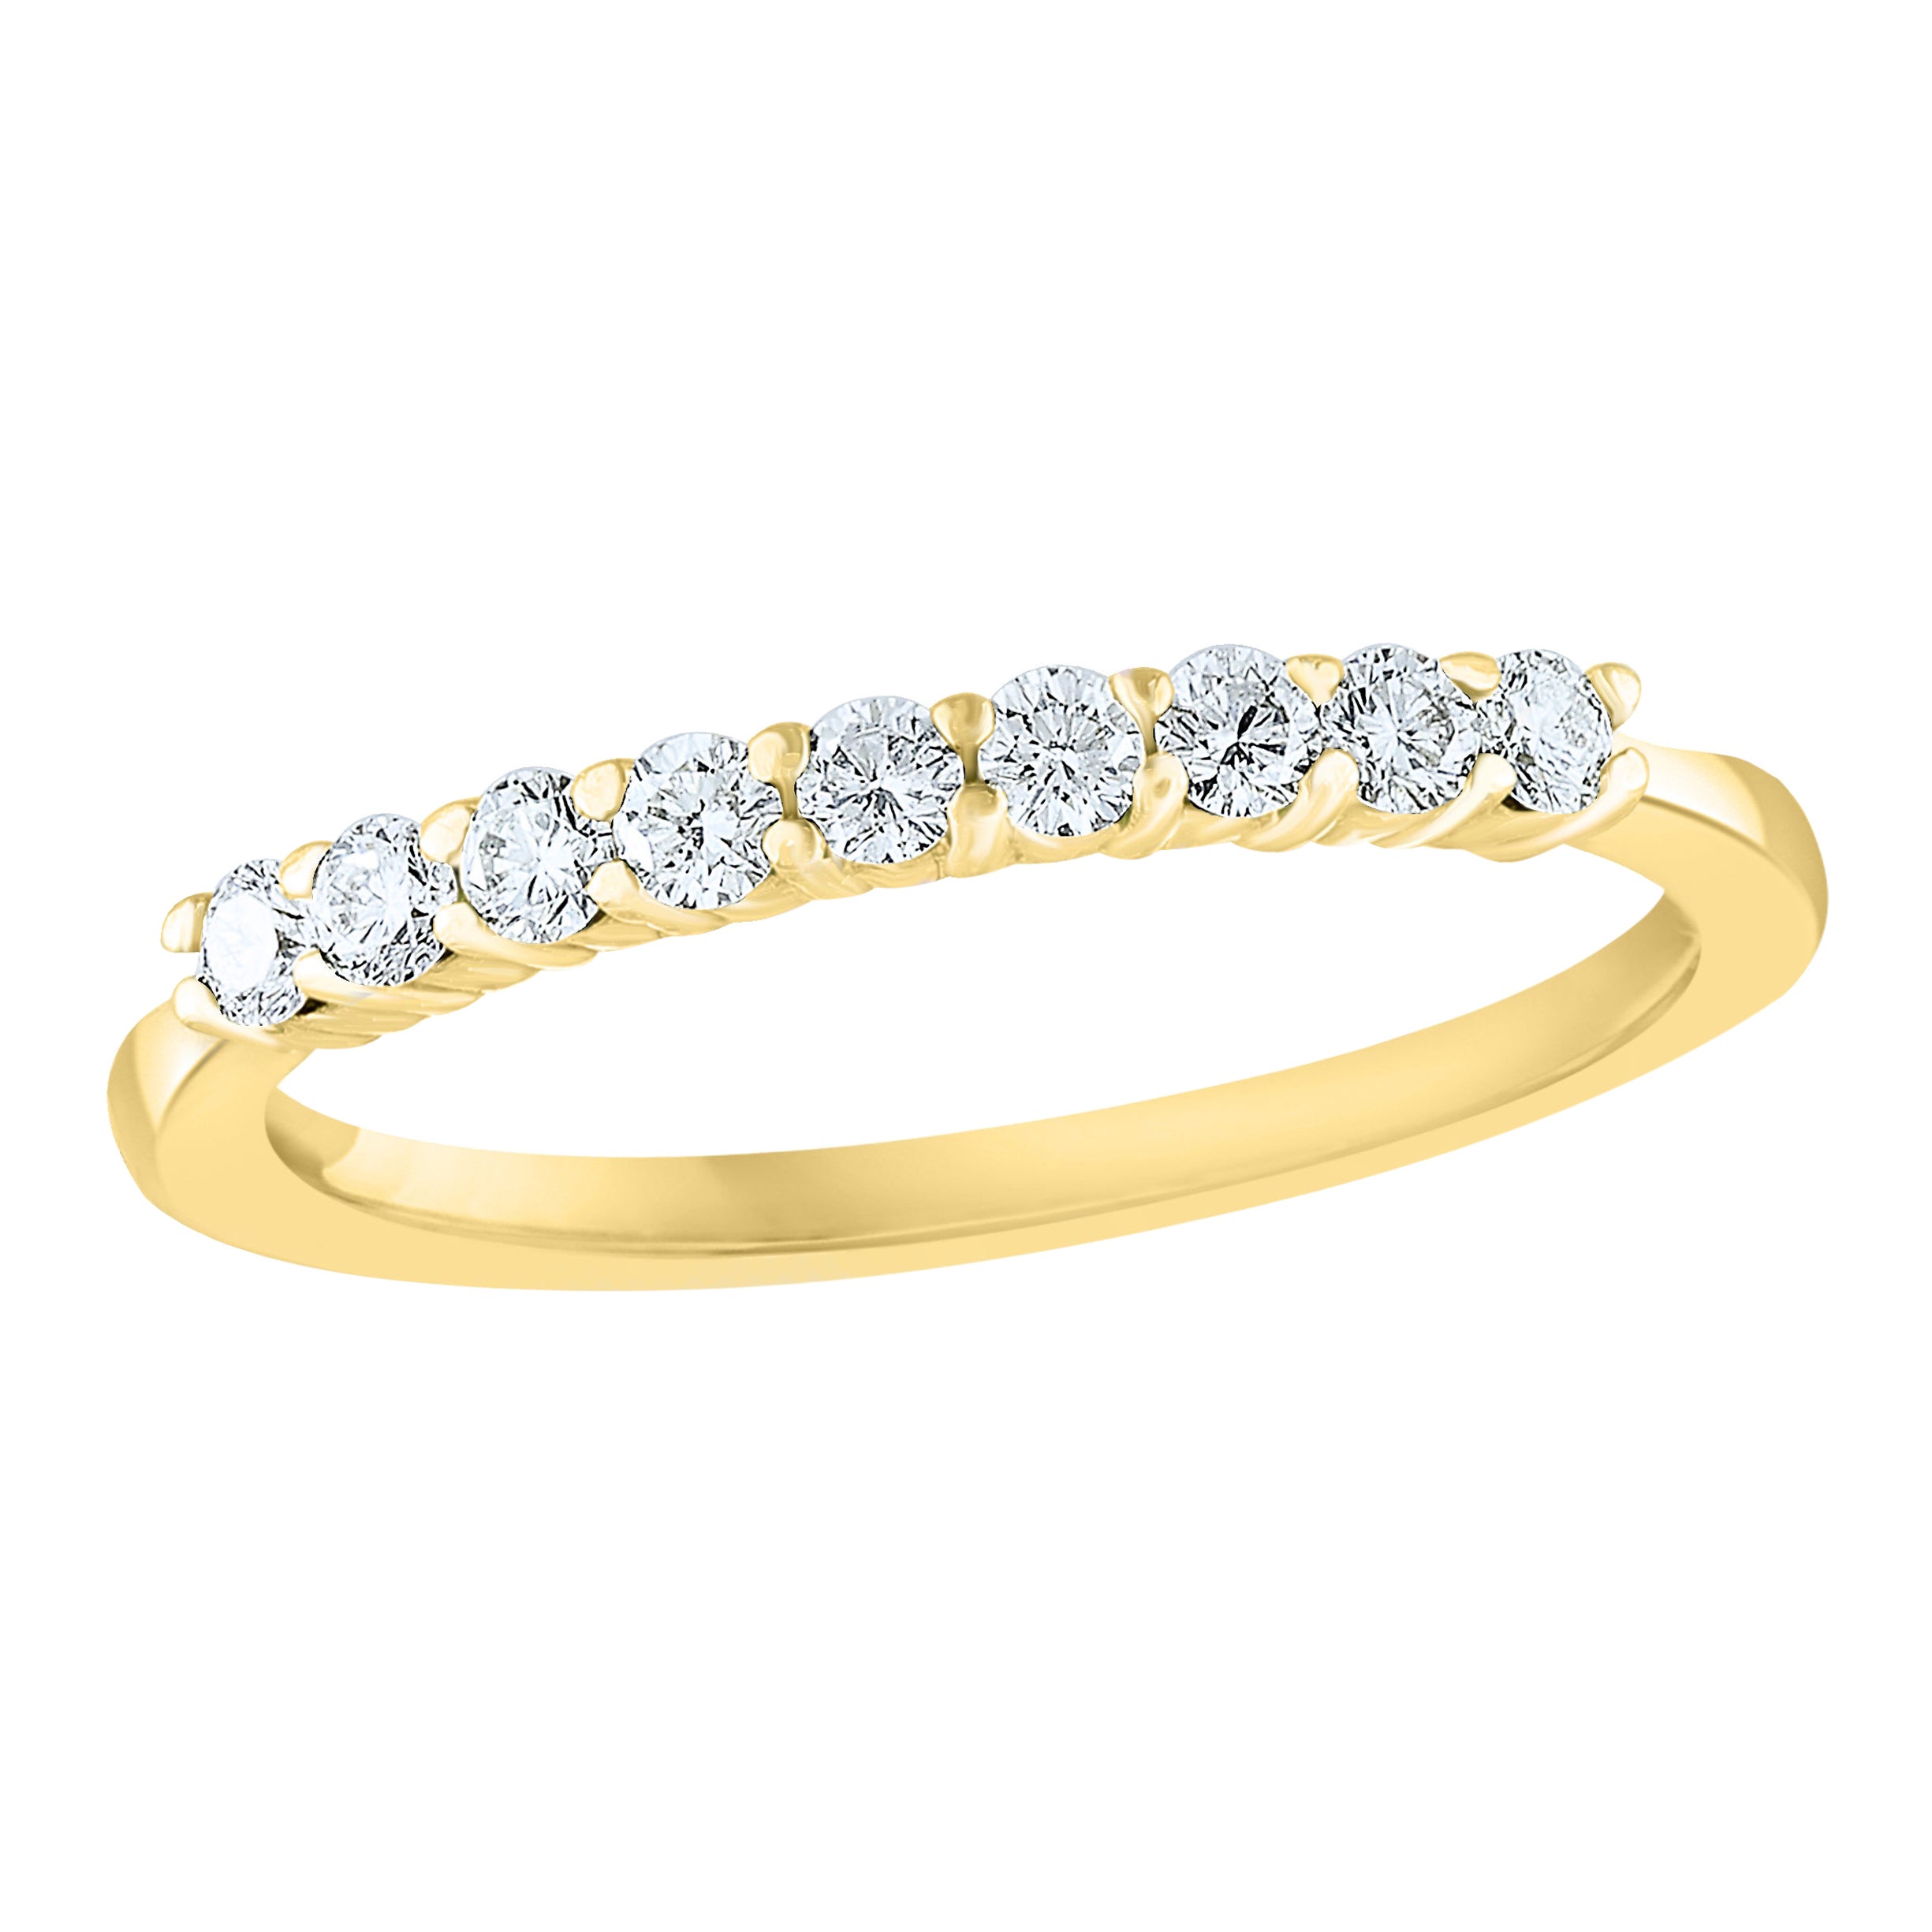 0.23 Carat Brilliant cut Diamond Wedding Band in 14K Yellow Gold For Sale